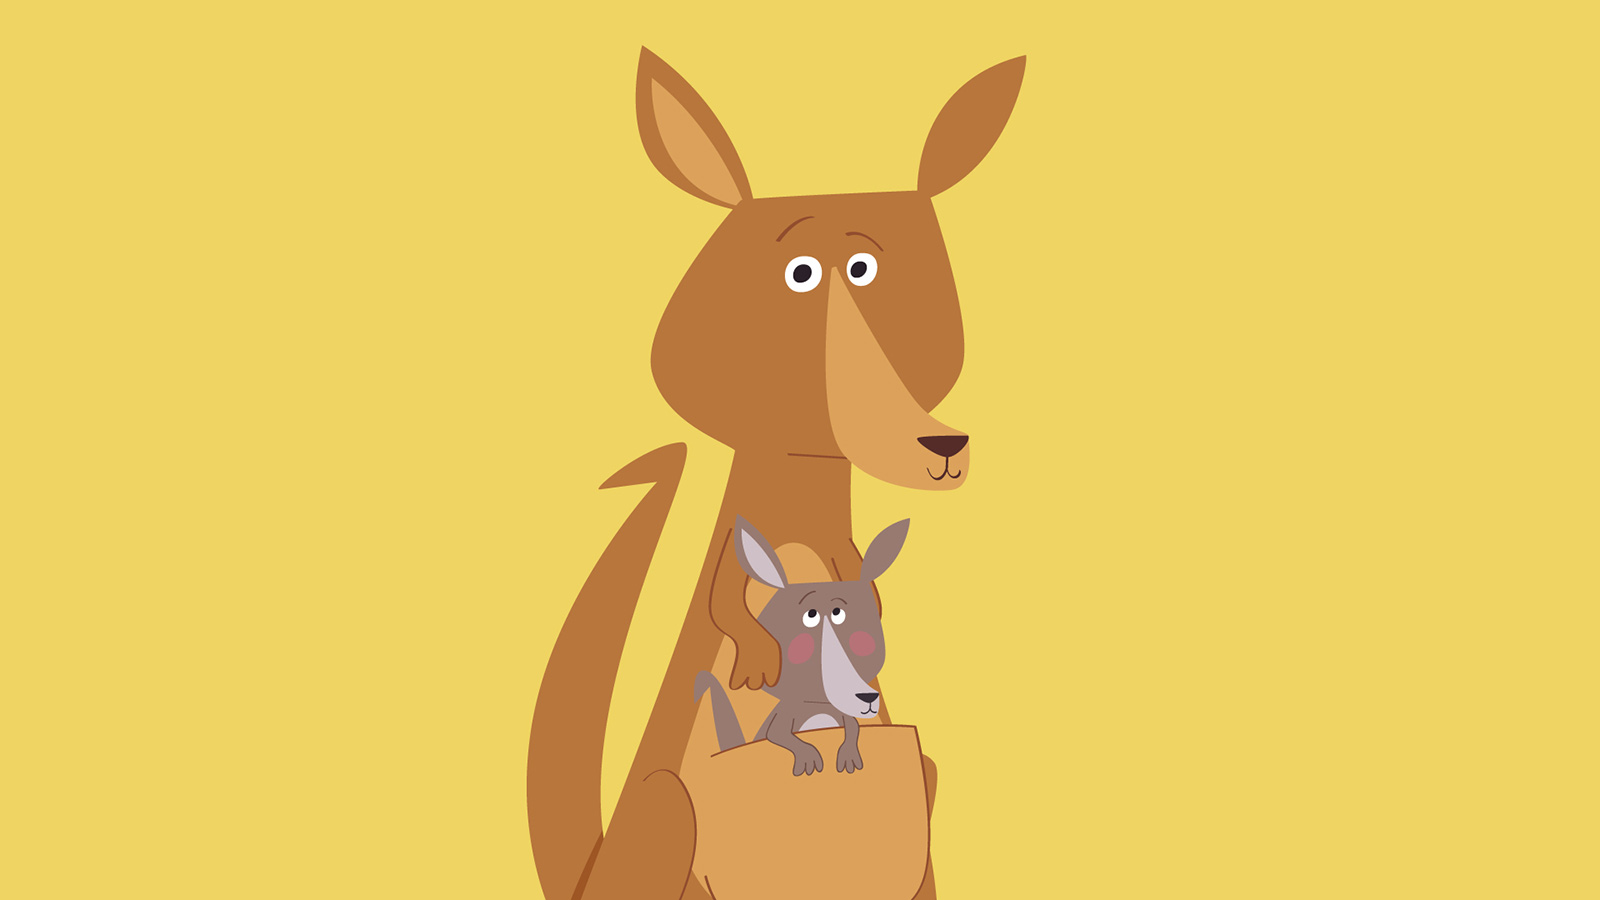 Only a kangaroo